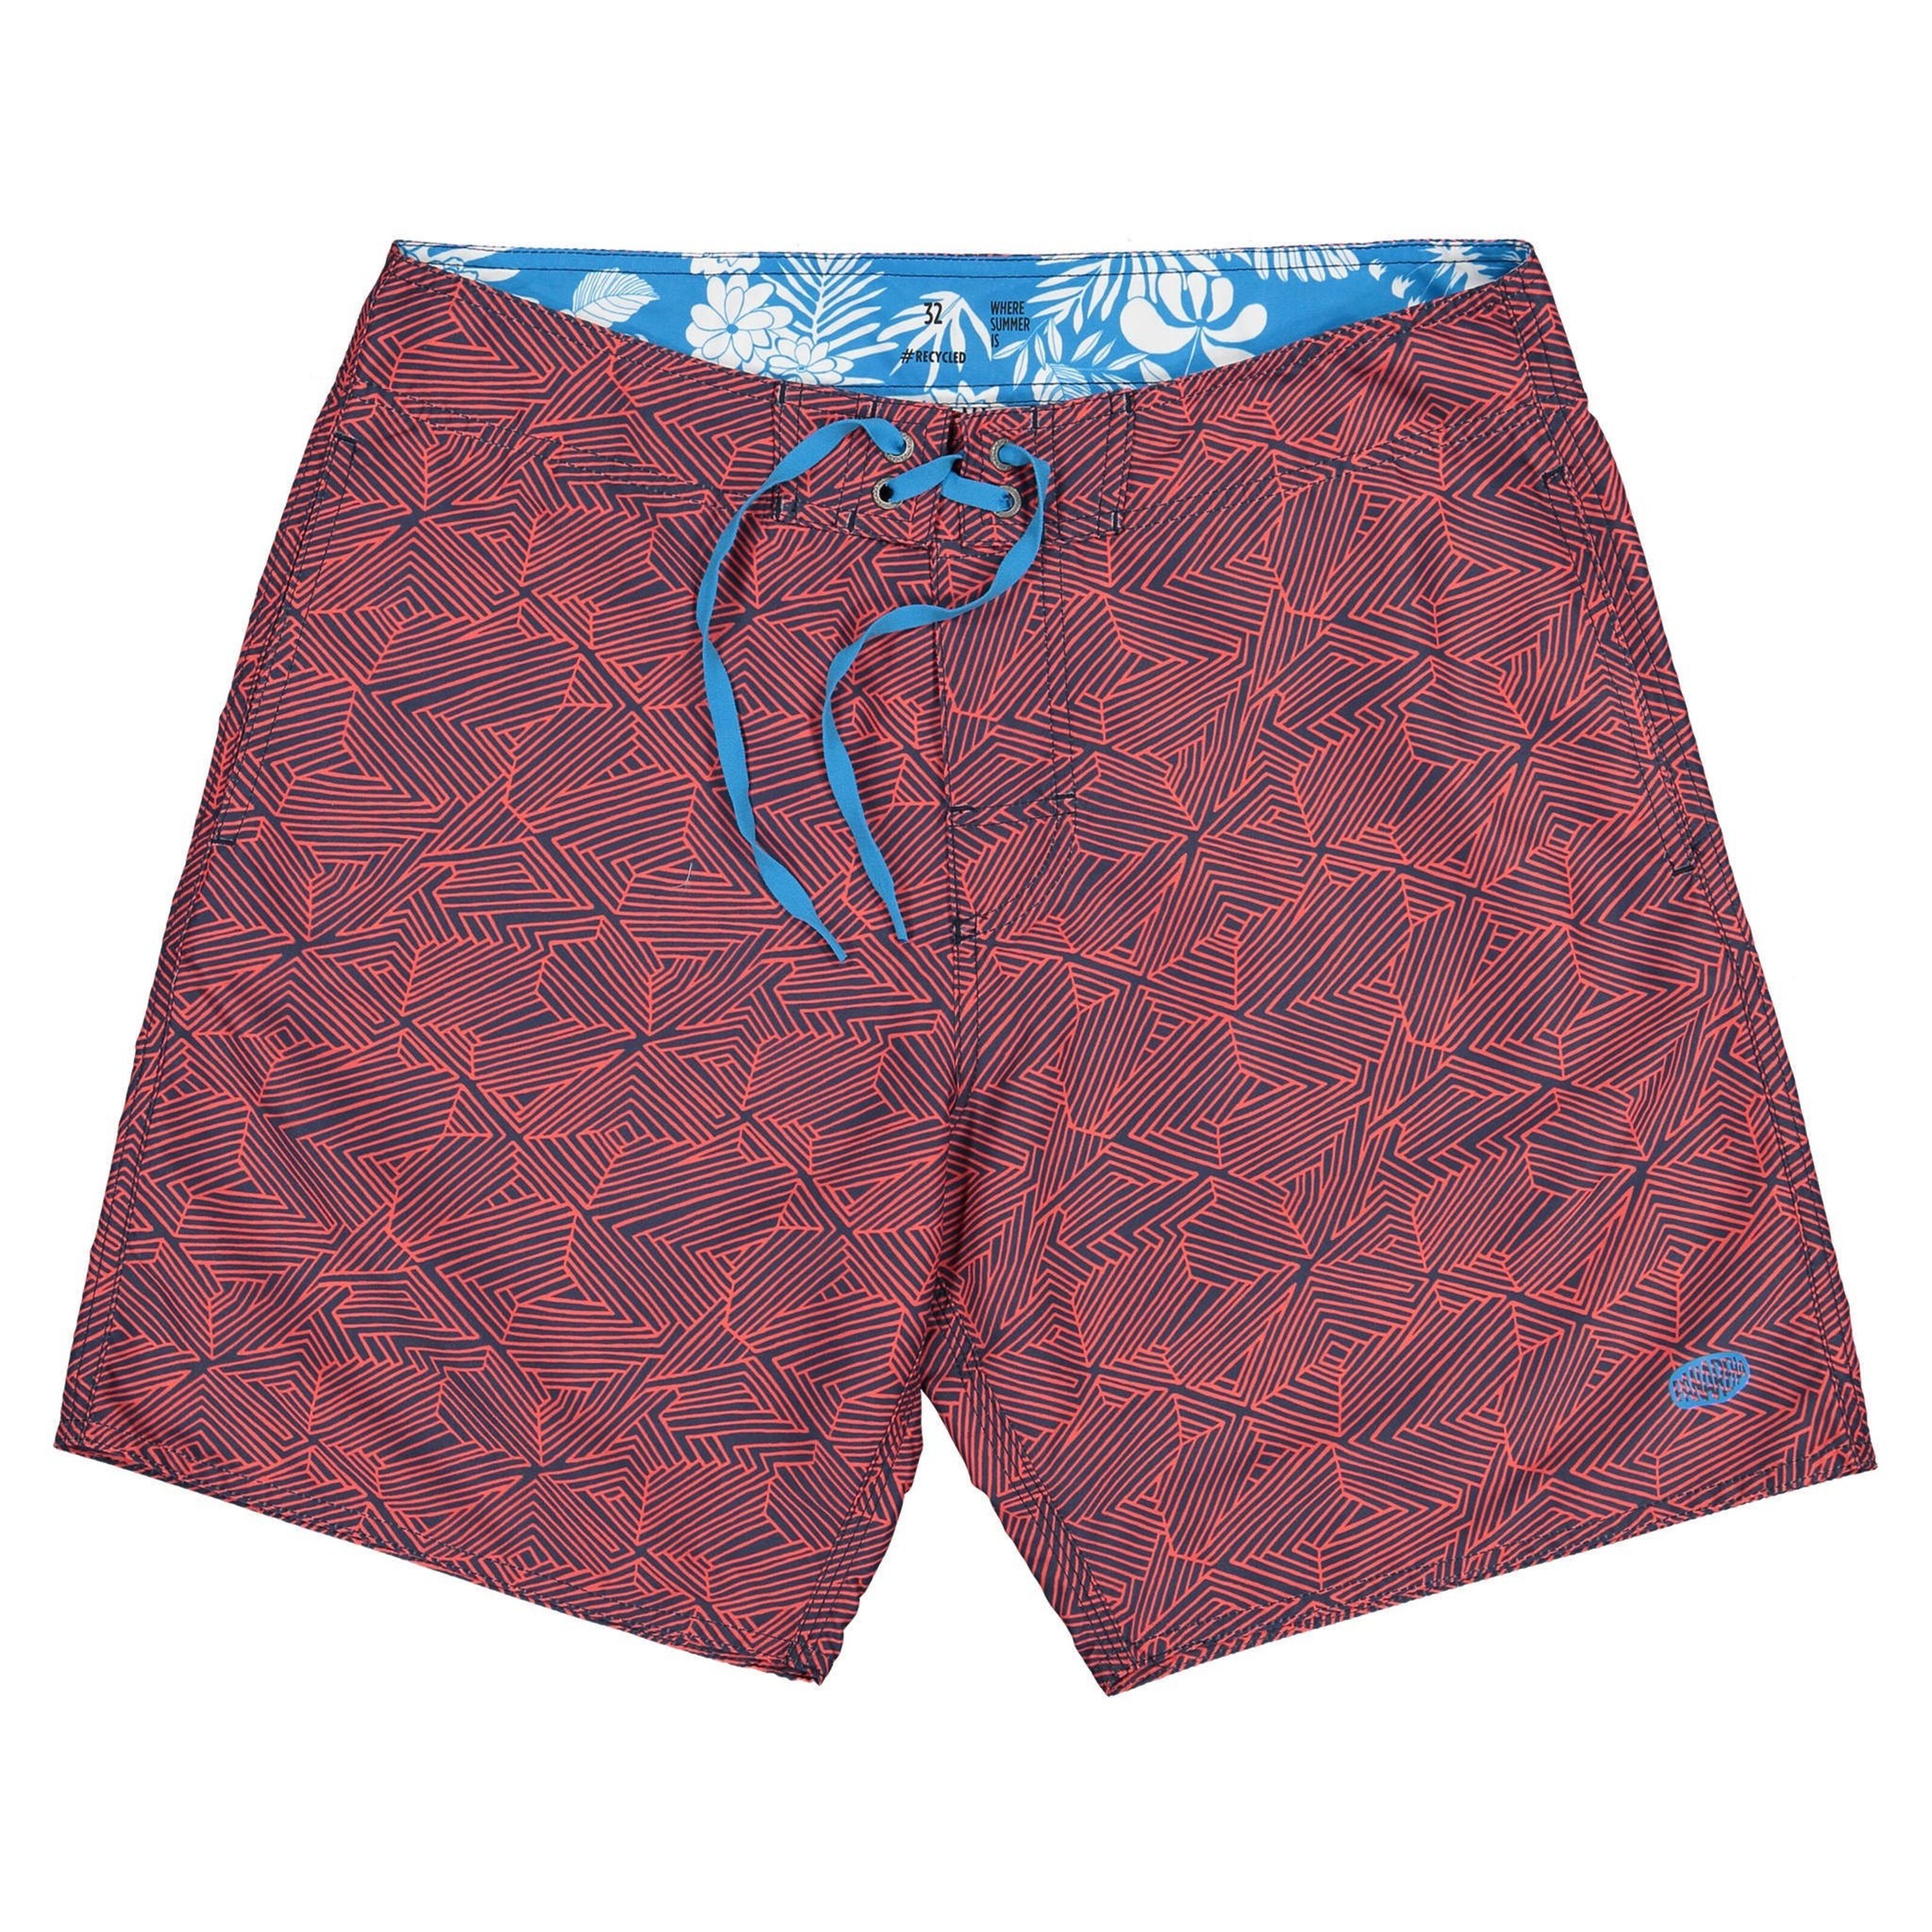 Buy wholesale Beach Shorts PLAKA RPET navy red